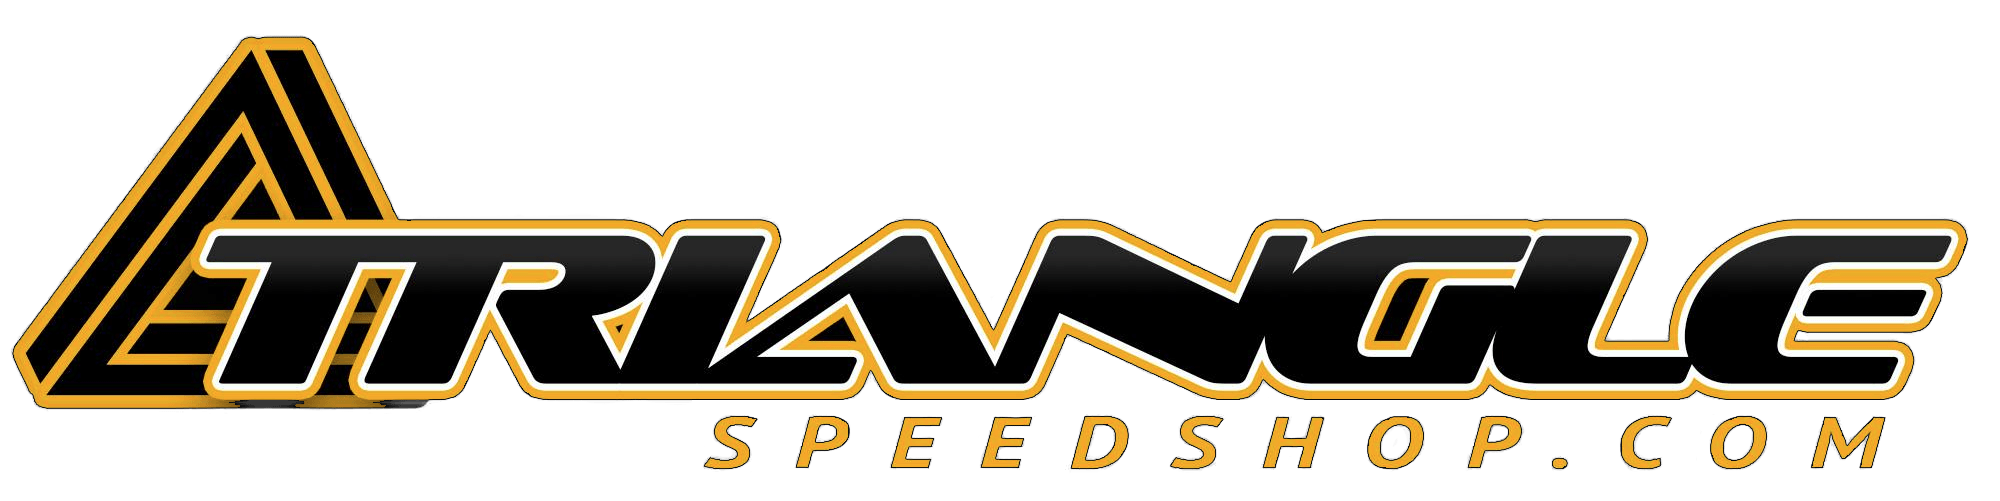 Speed Shop Logo - Home - Triangle Speed Shop